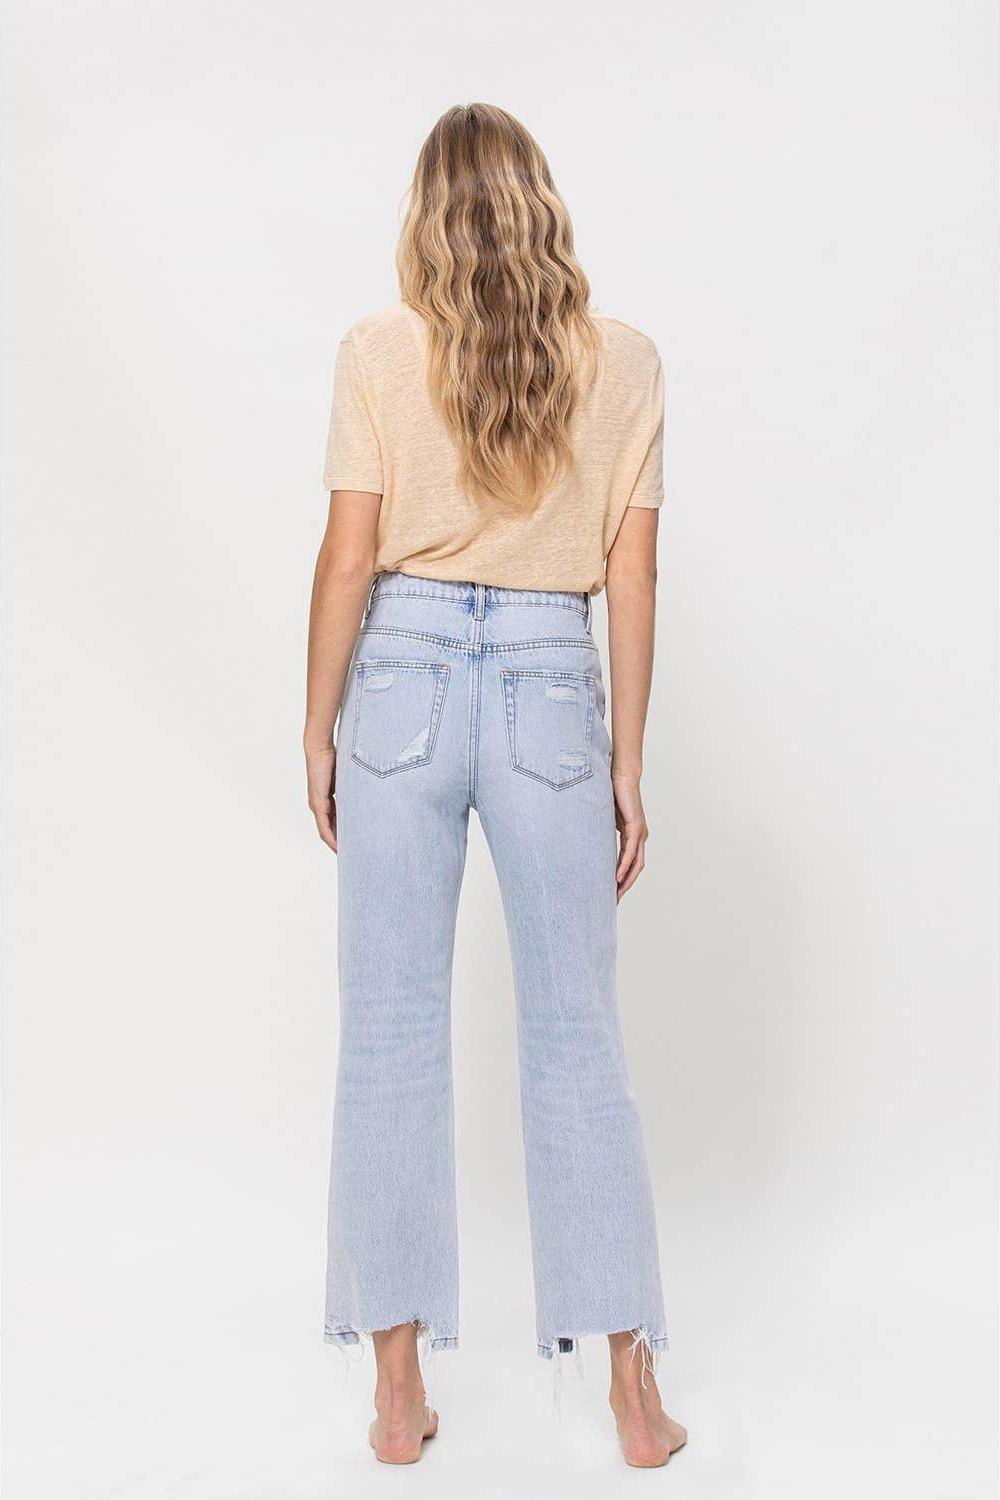 Dakota 90's Vintage Boyfriend Jeans - Strawberry Moon Boutique